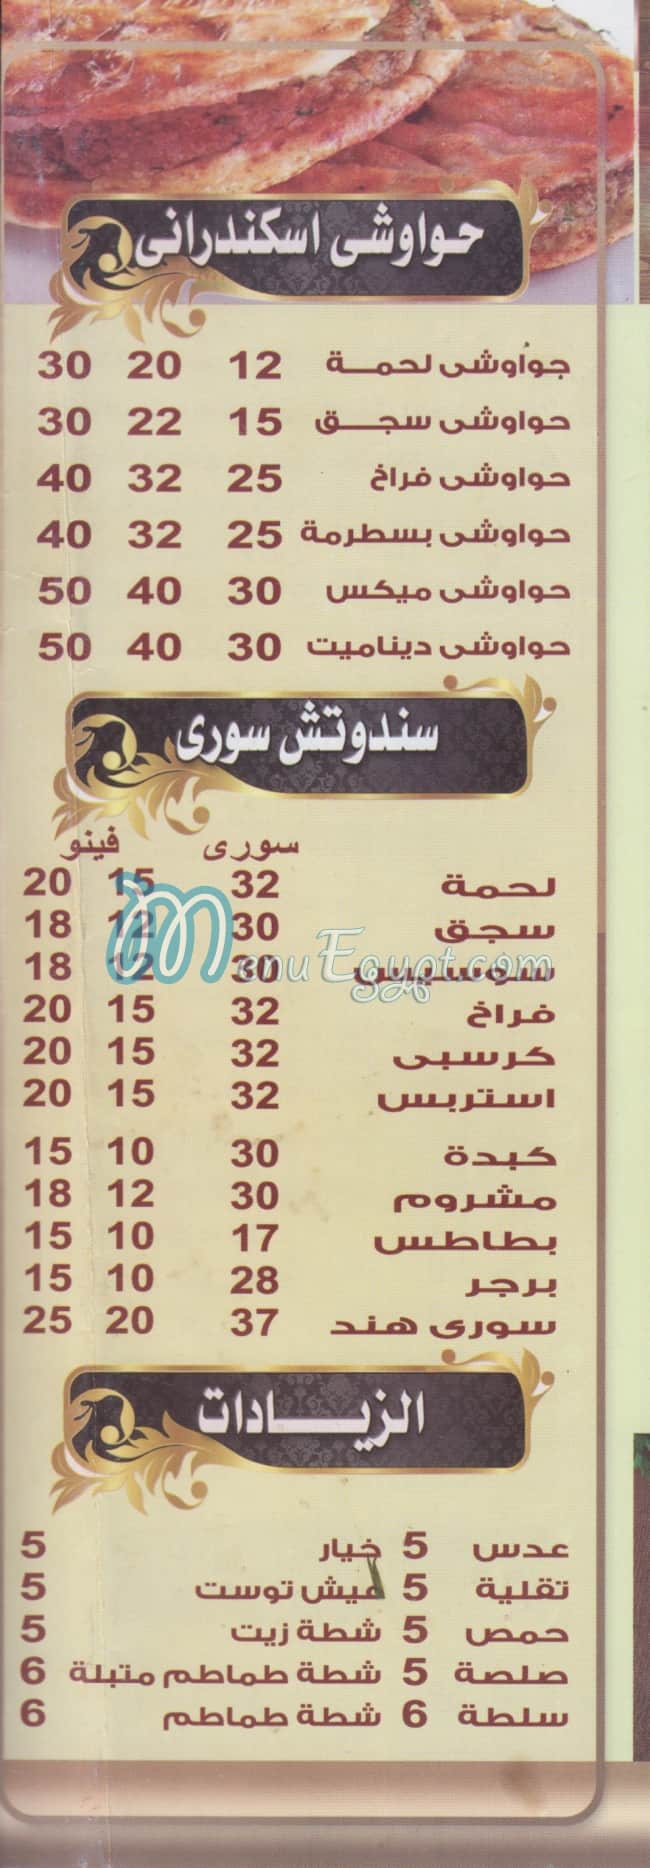 Koshary Hend El Maadi online menu